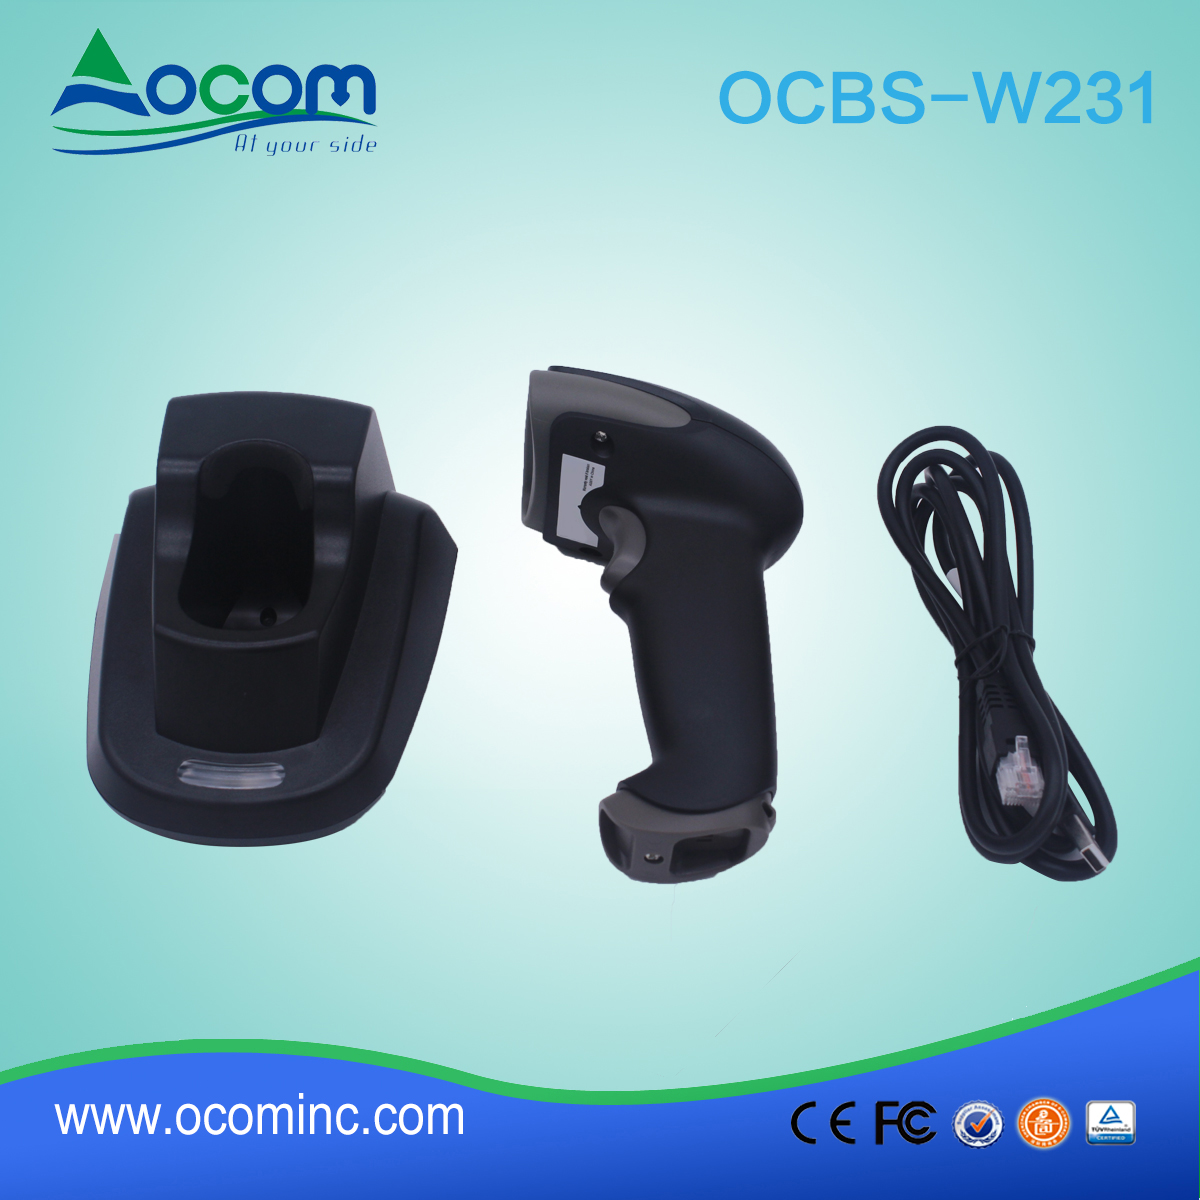 (OCBS-W231) Handheld 433Mhz Wireless 2D Barcode Scanner With Cradle